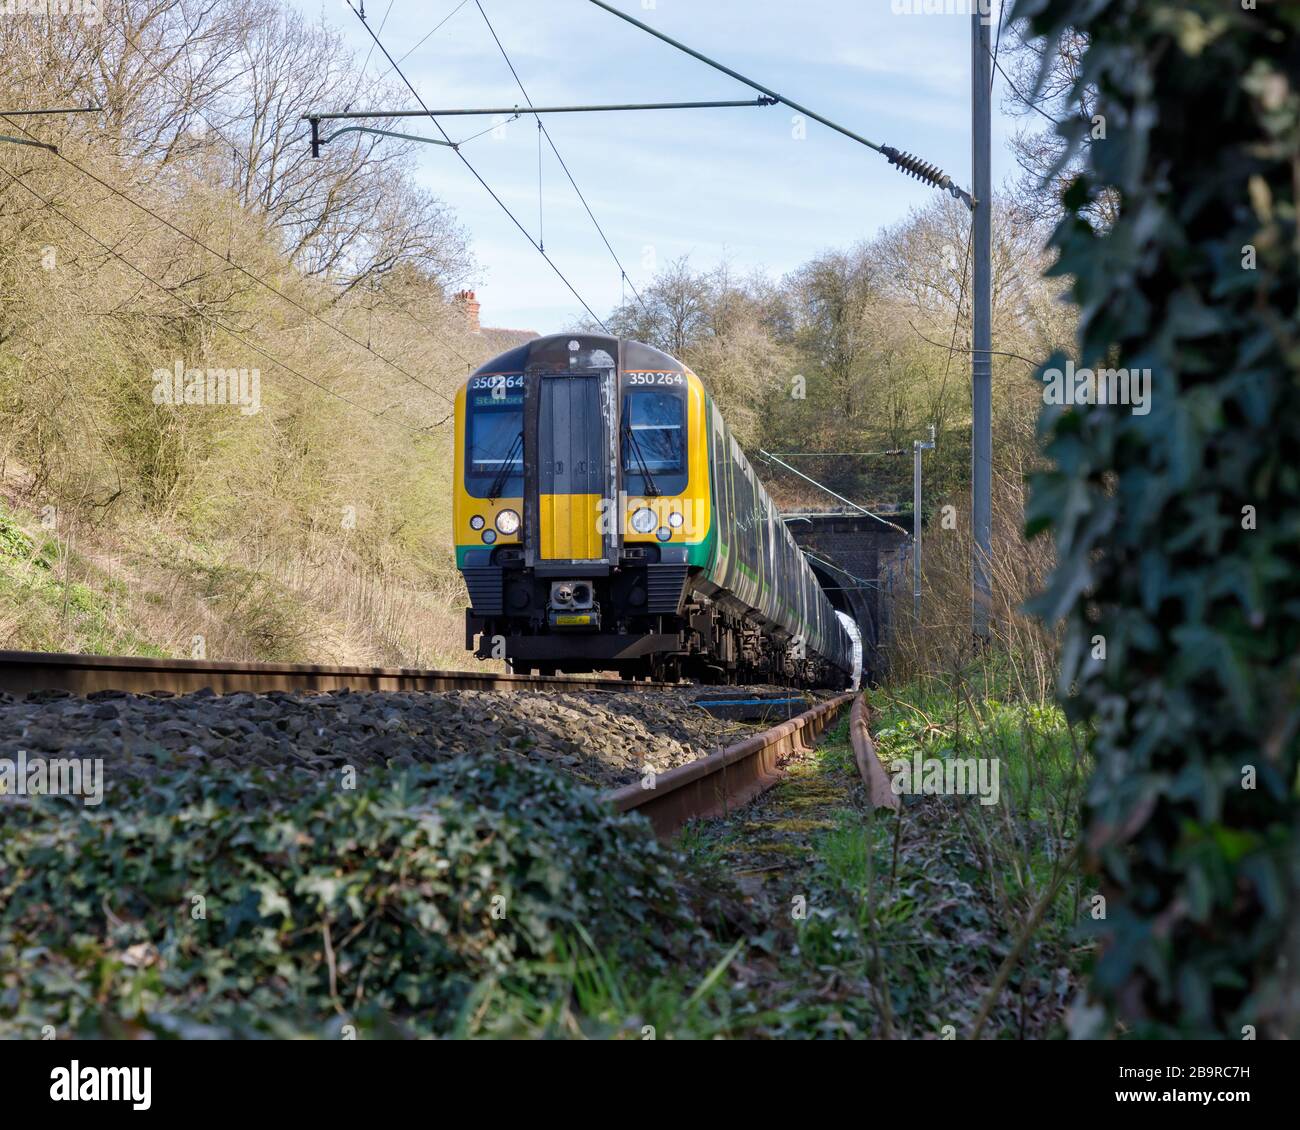 Crick, Northamptonshire, UK, March 2020: A London NorthWestern Class 350 EMU train to Stafford emerges from Crick Lodge tunnel. Stock Photo